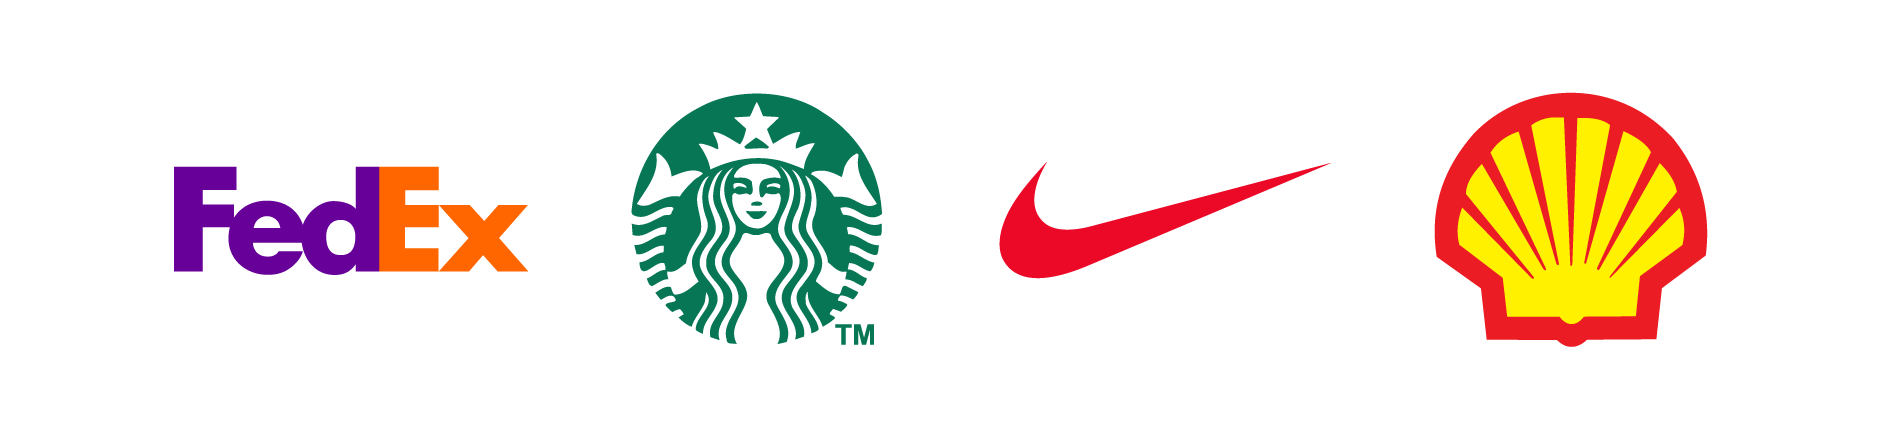 Symbolic Images Corporate Logos